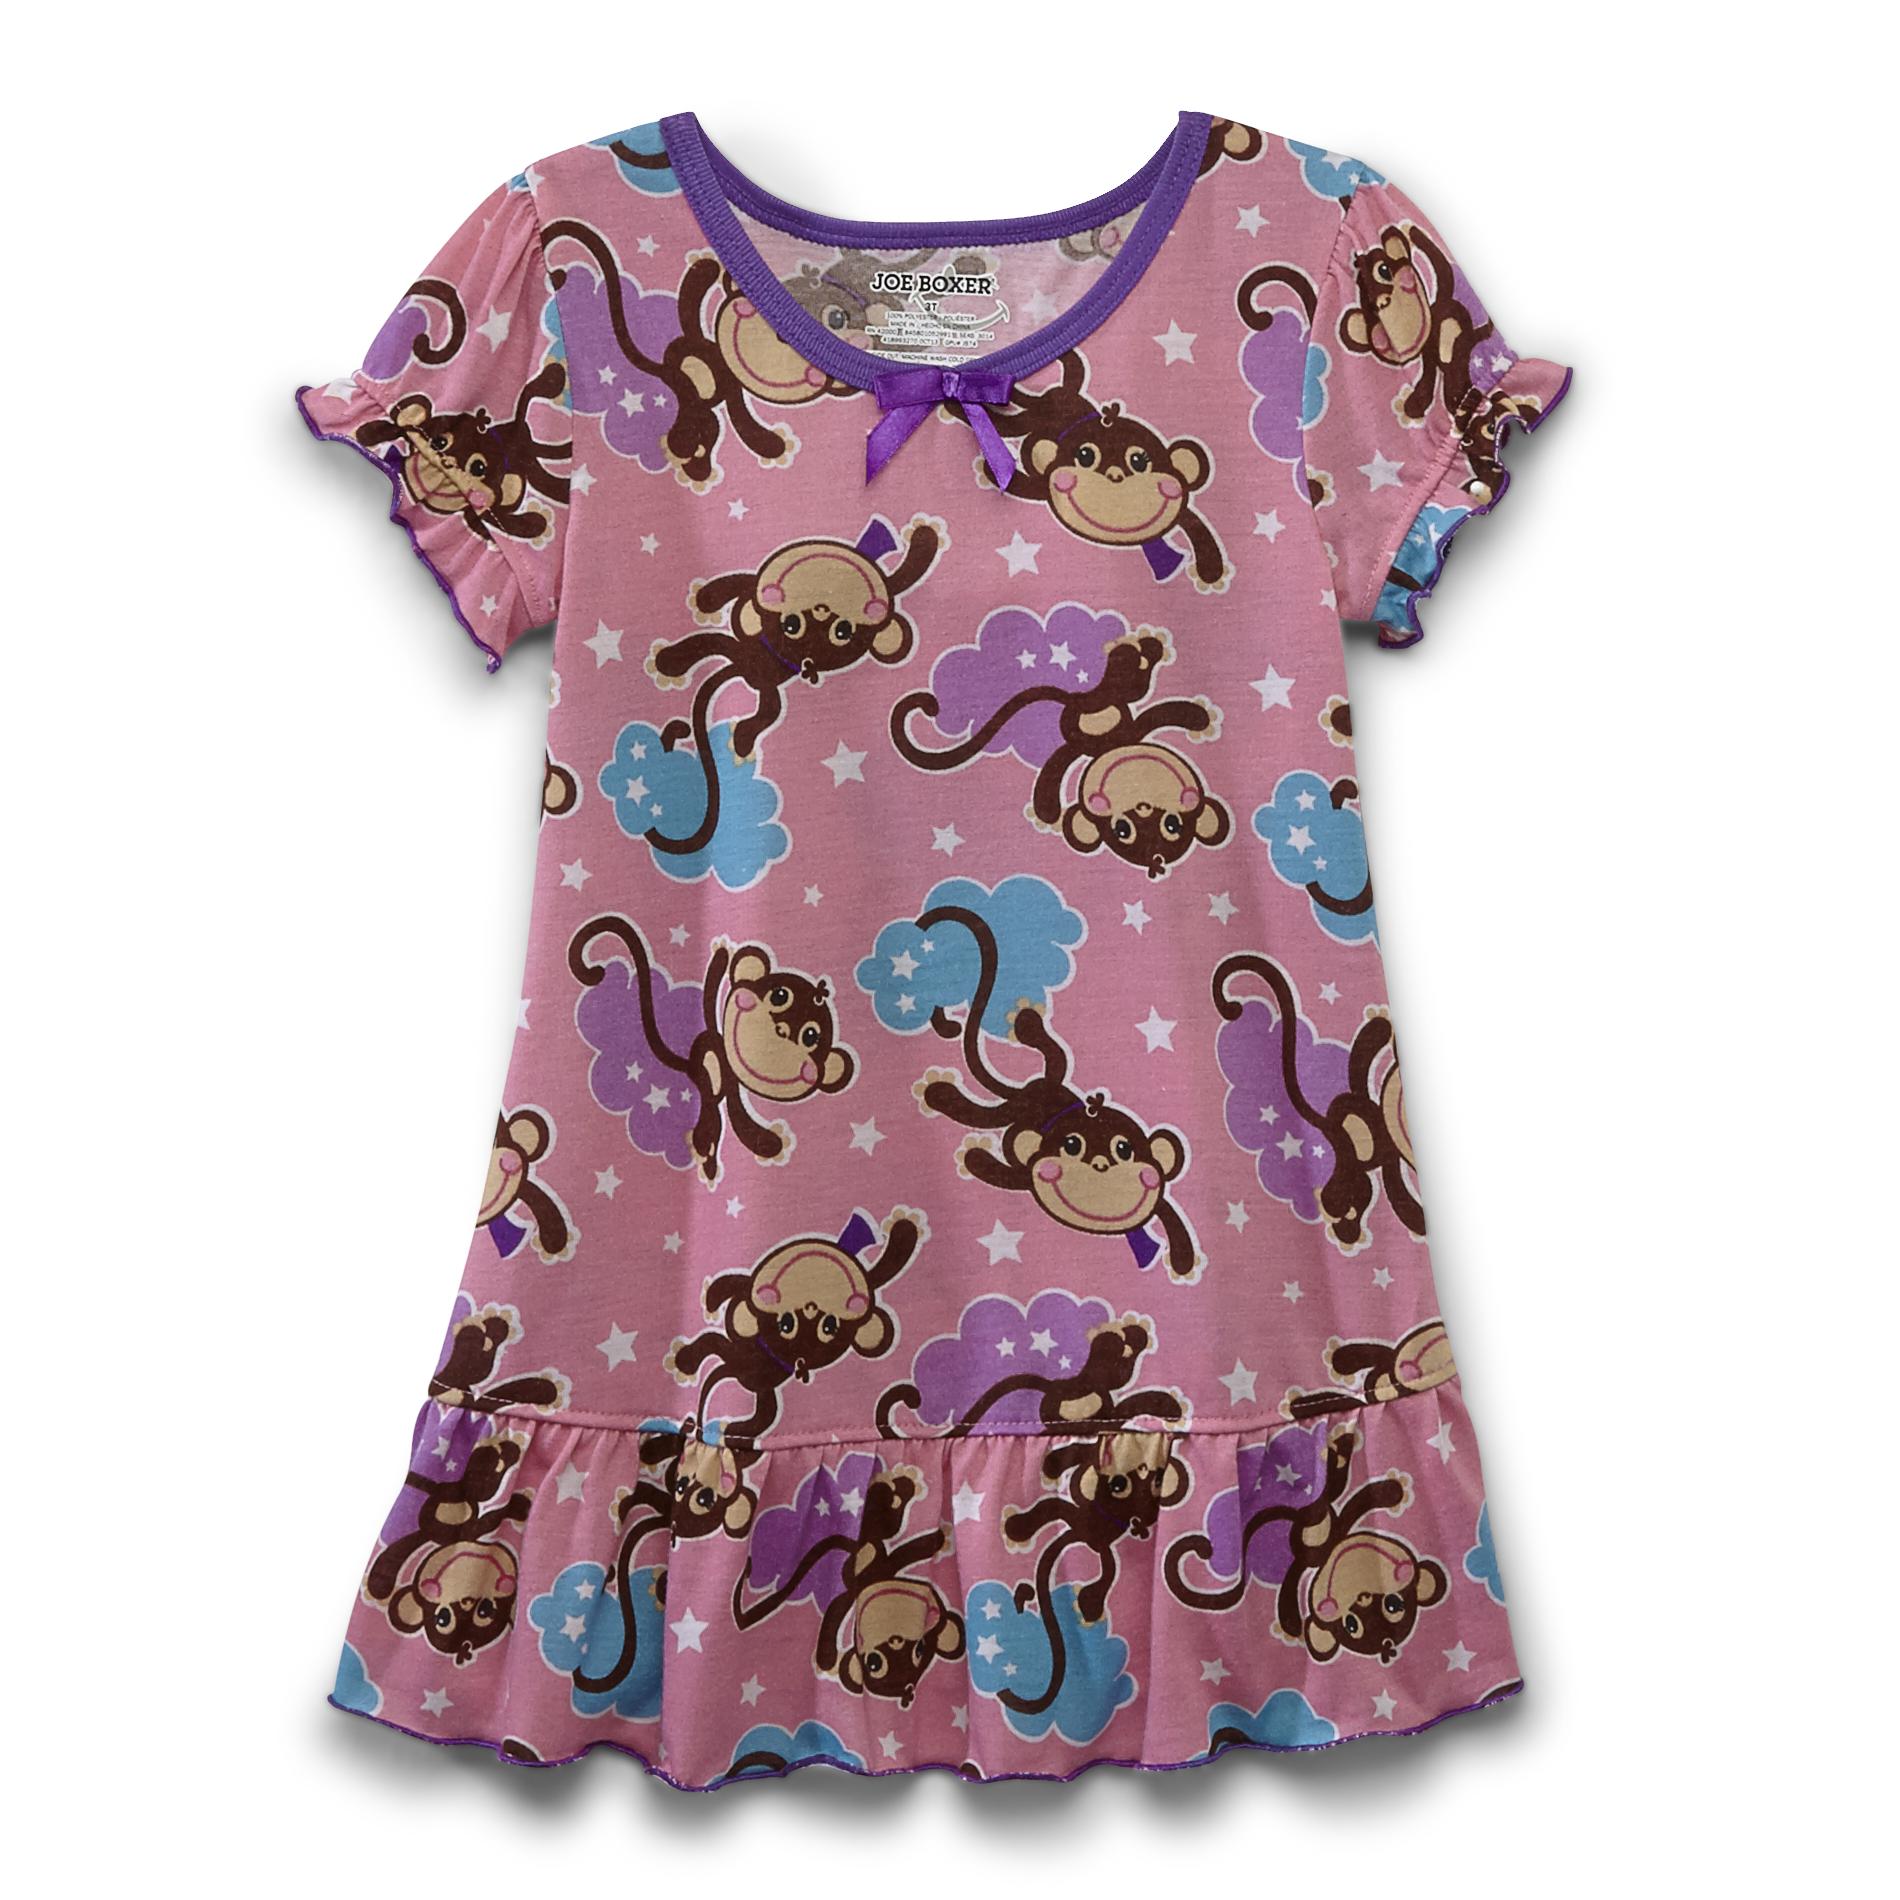 Joe Boxer Toddler Girl's Nightgown - Monkeys